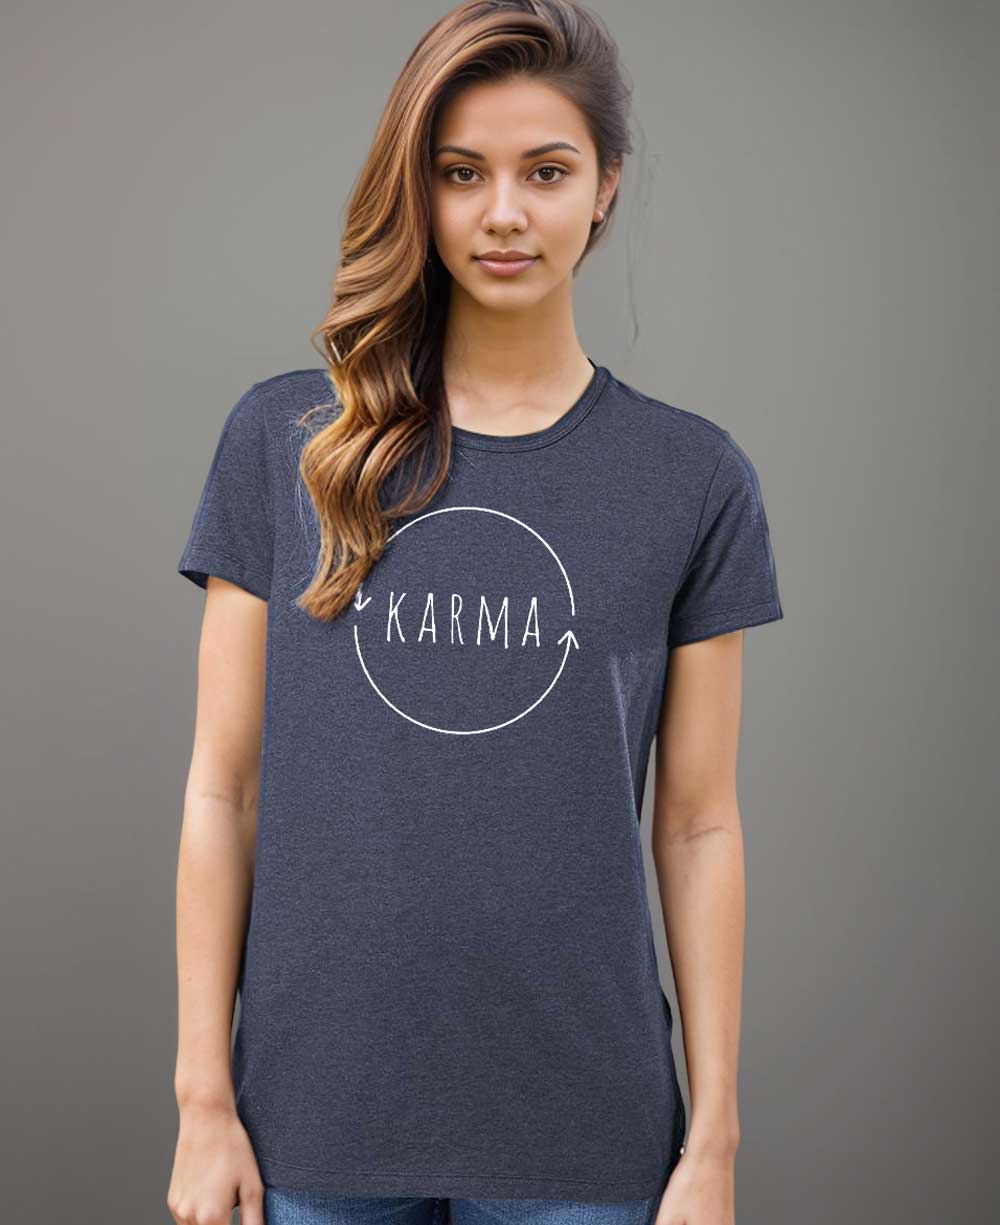 Karma Women's Heather Blue Recycled T-Shirt - Shirts & Tops S